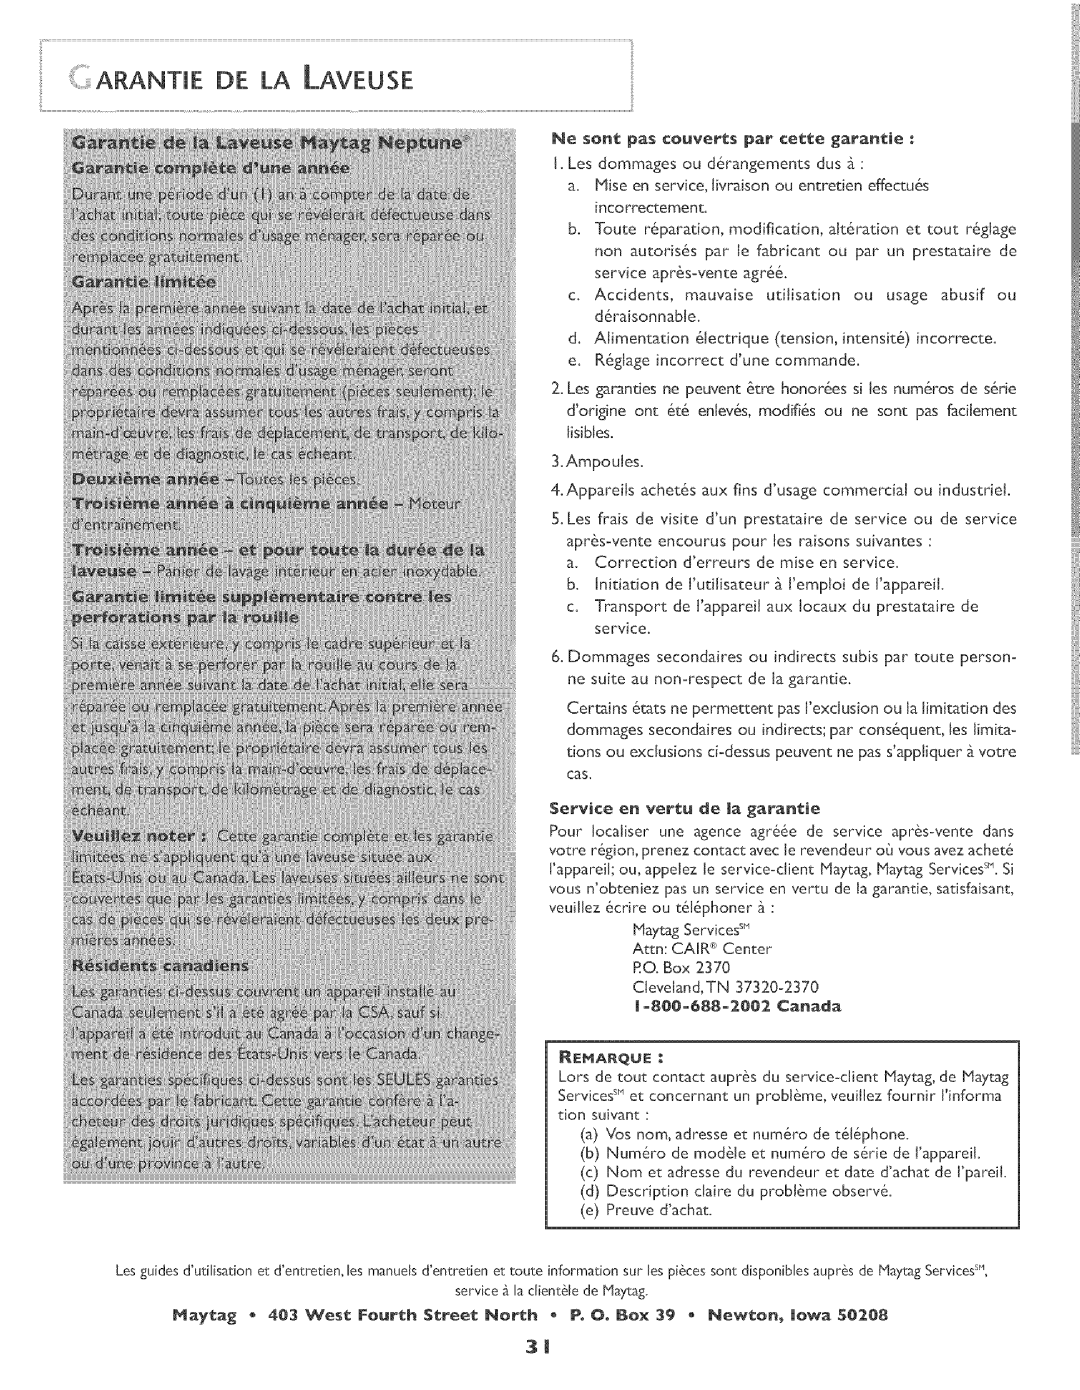 Maytag MAH-3 operating instructions Arante De La Laveuse 